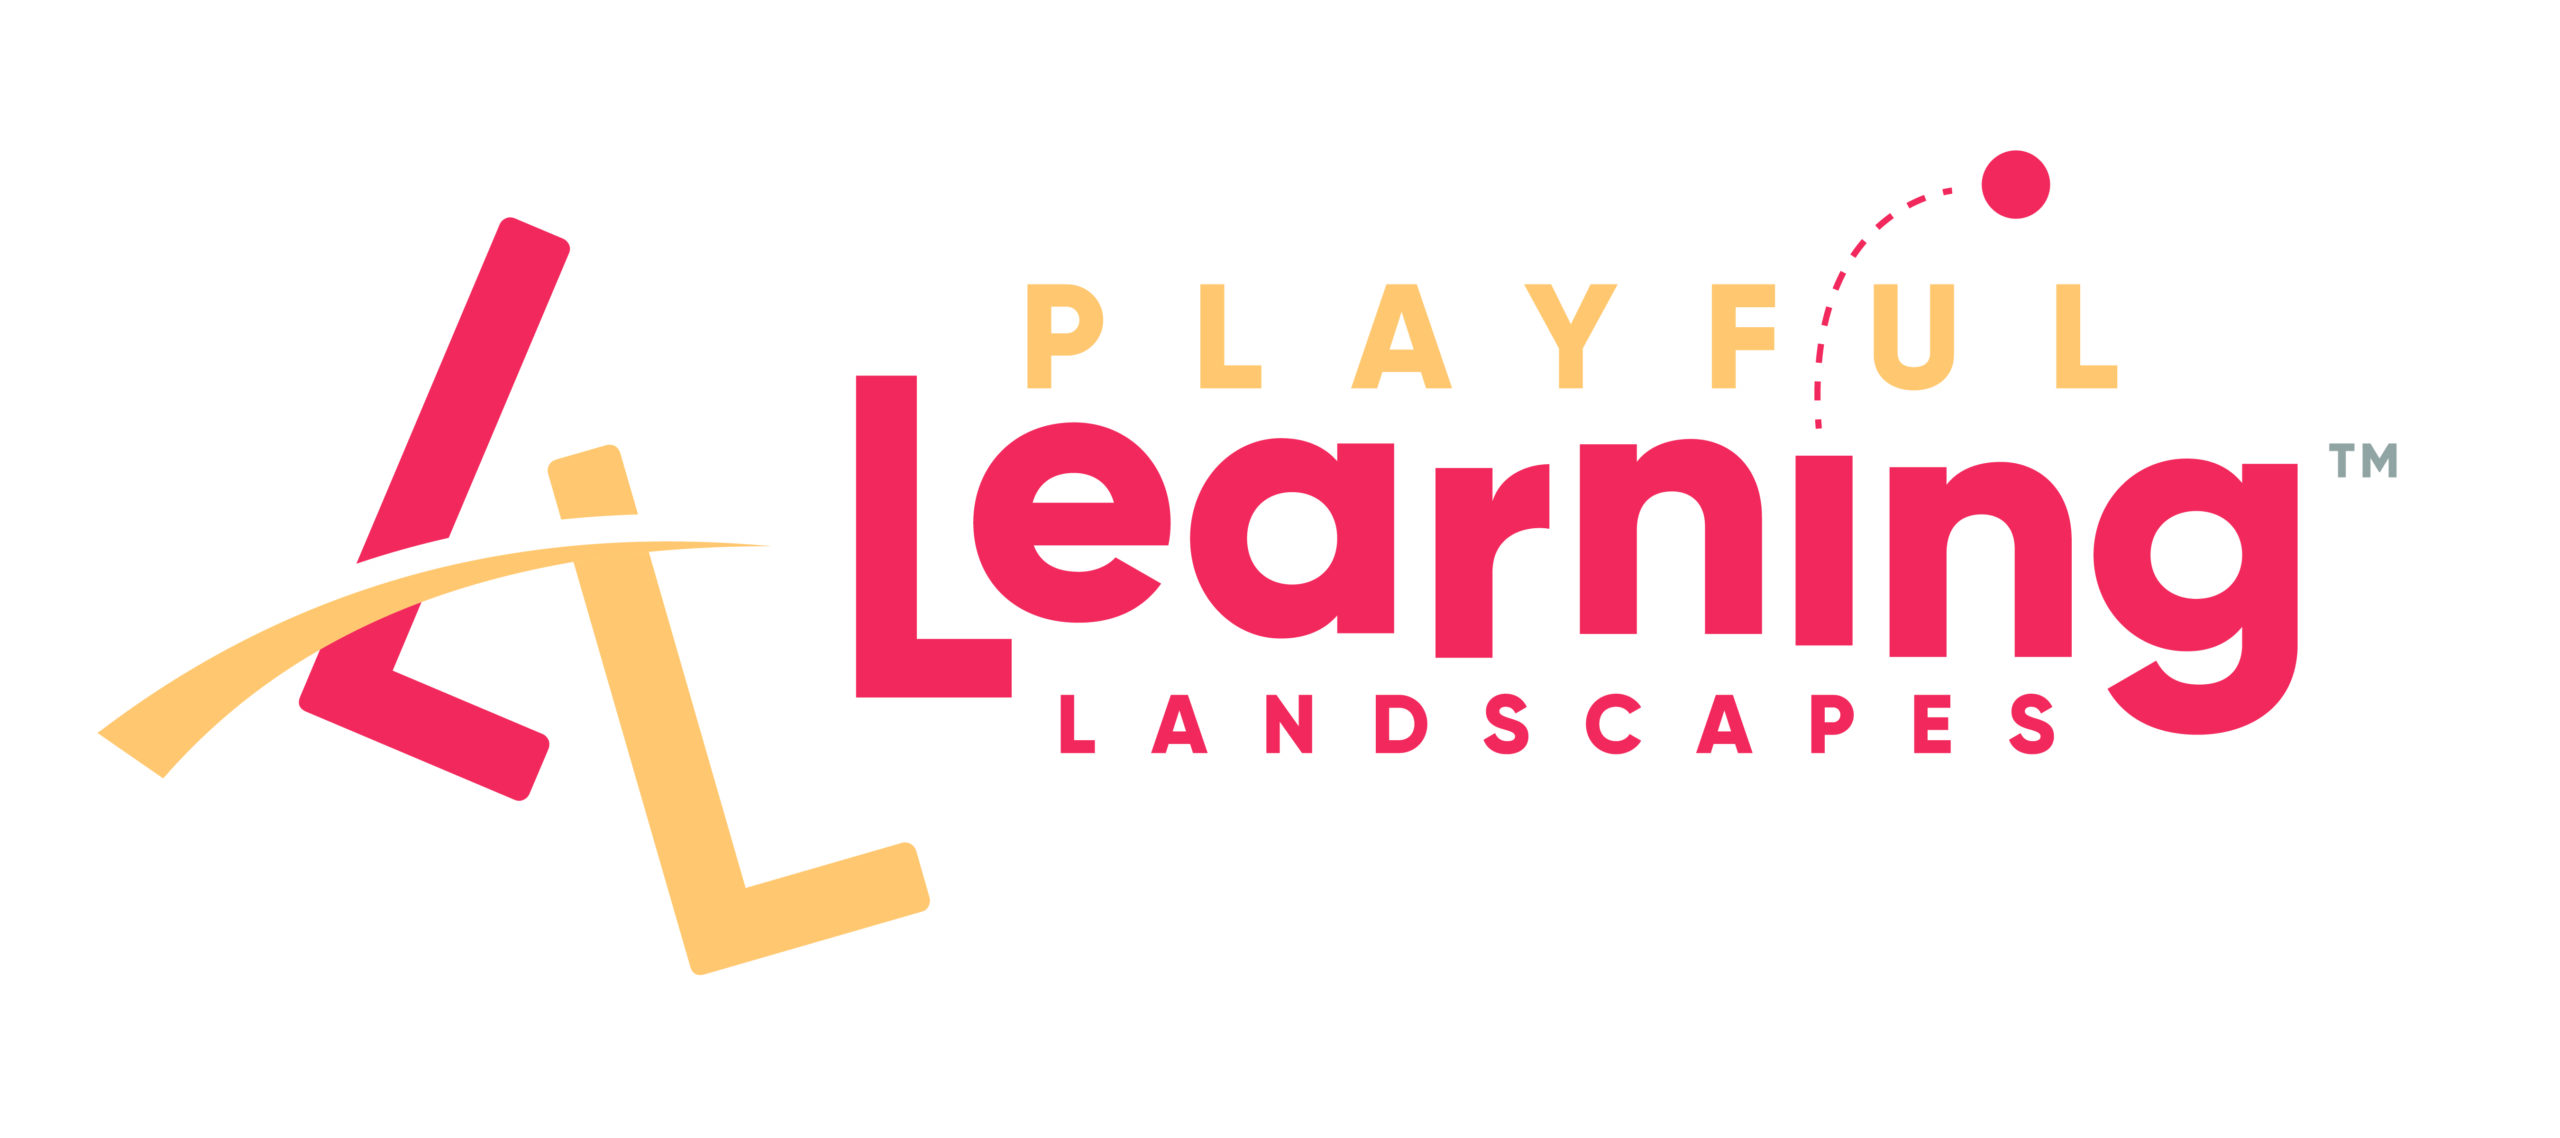 Playful Learning Landscapes Action Network